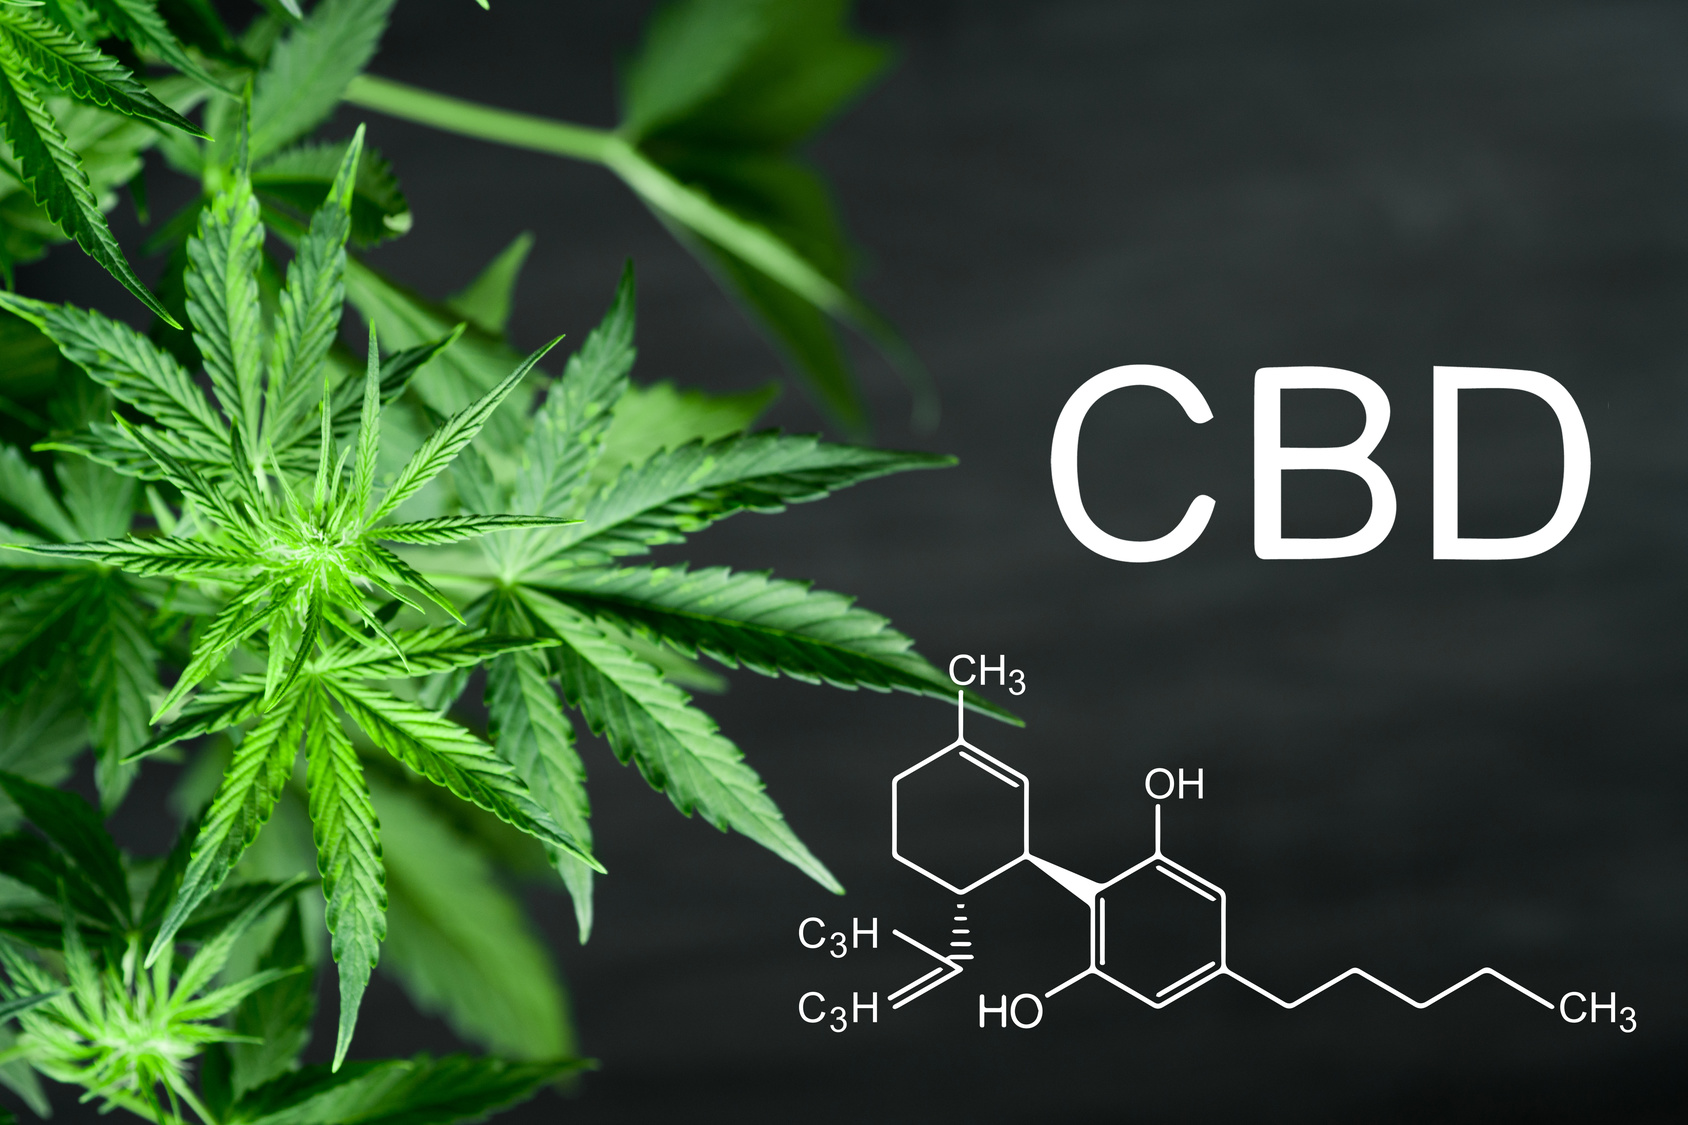 Does CBD get you high?